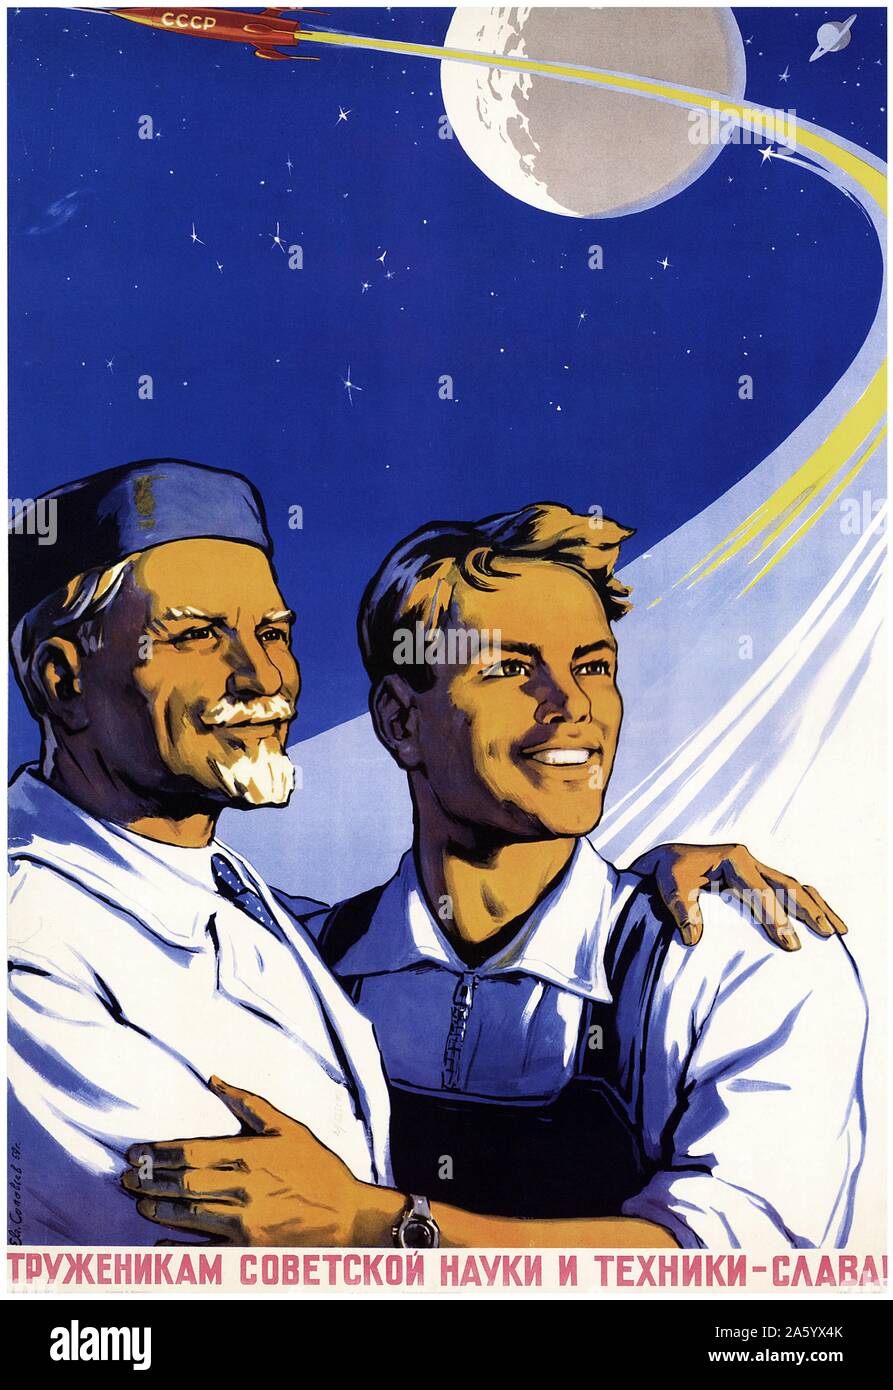 sowjetischen Raumfahrtprogramm, Propagandaplakat 1960 Stockfoto